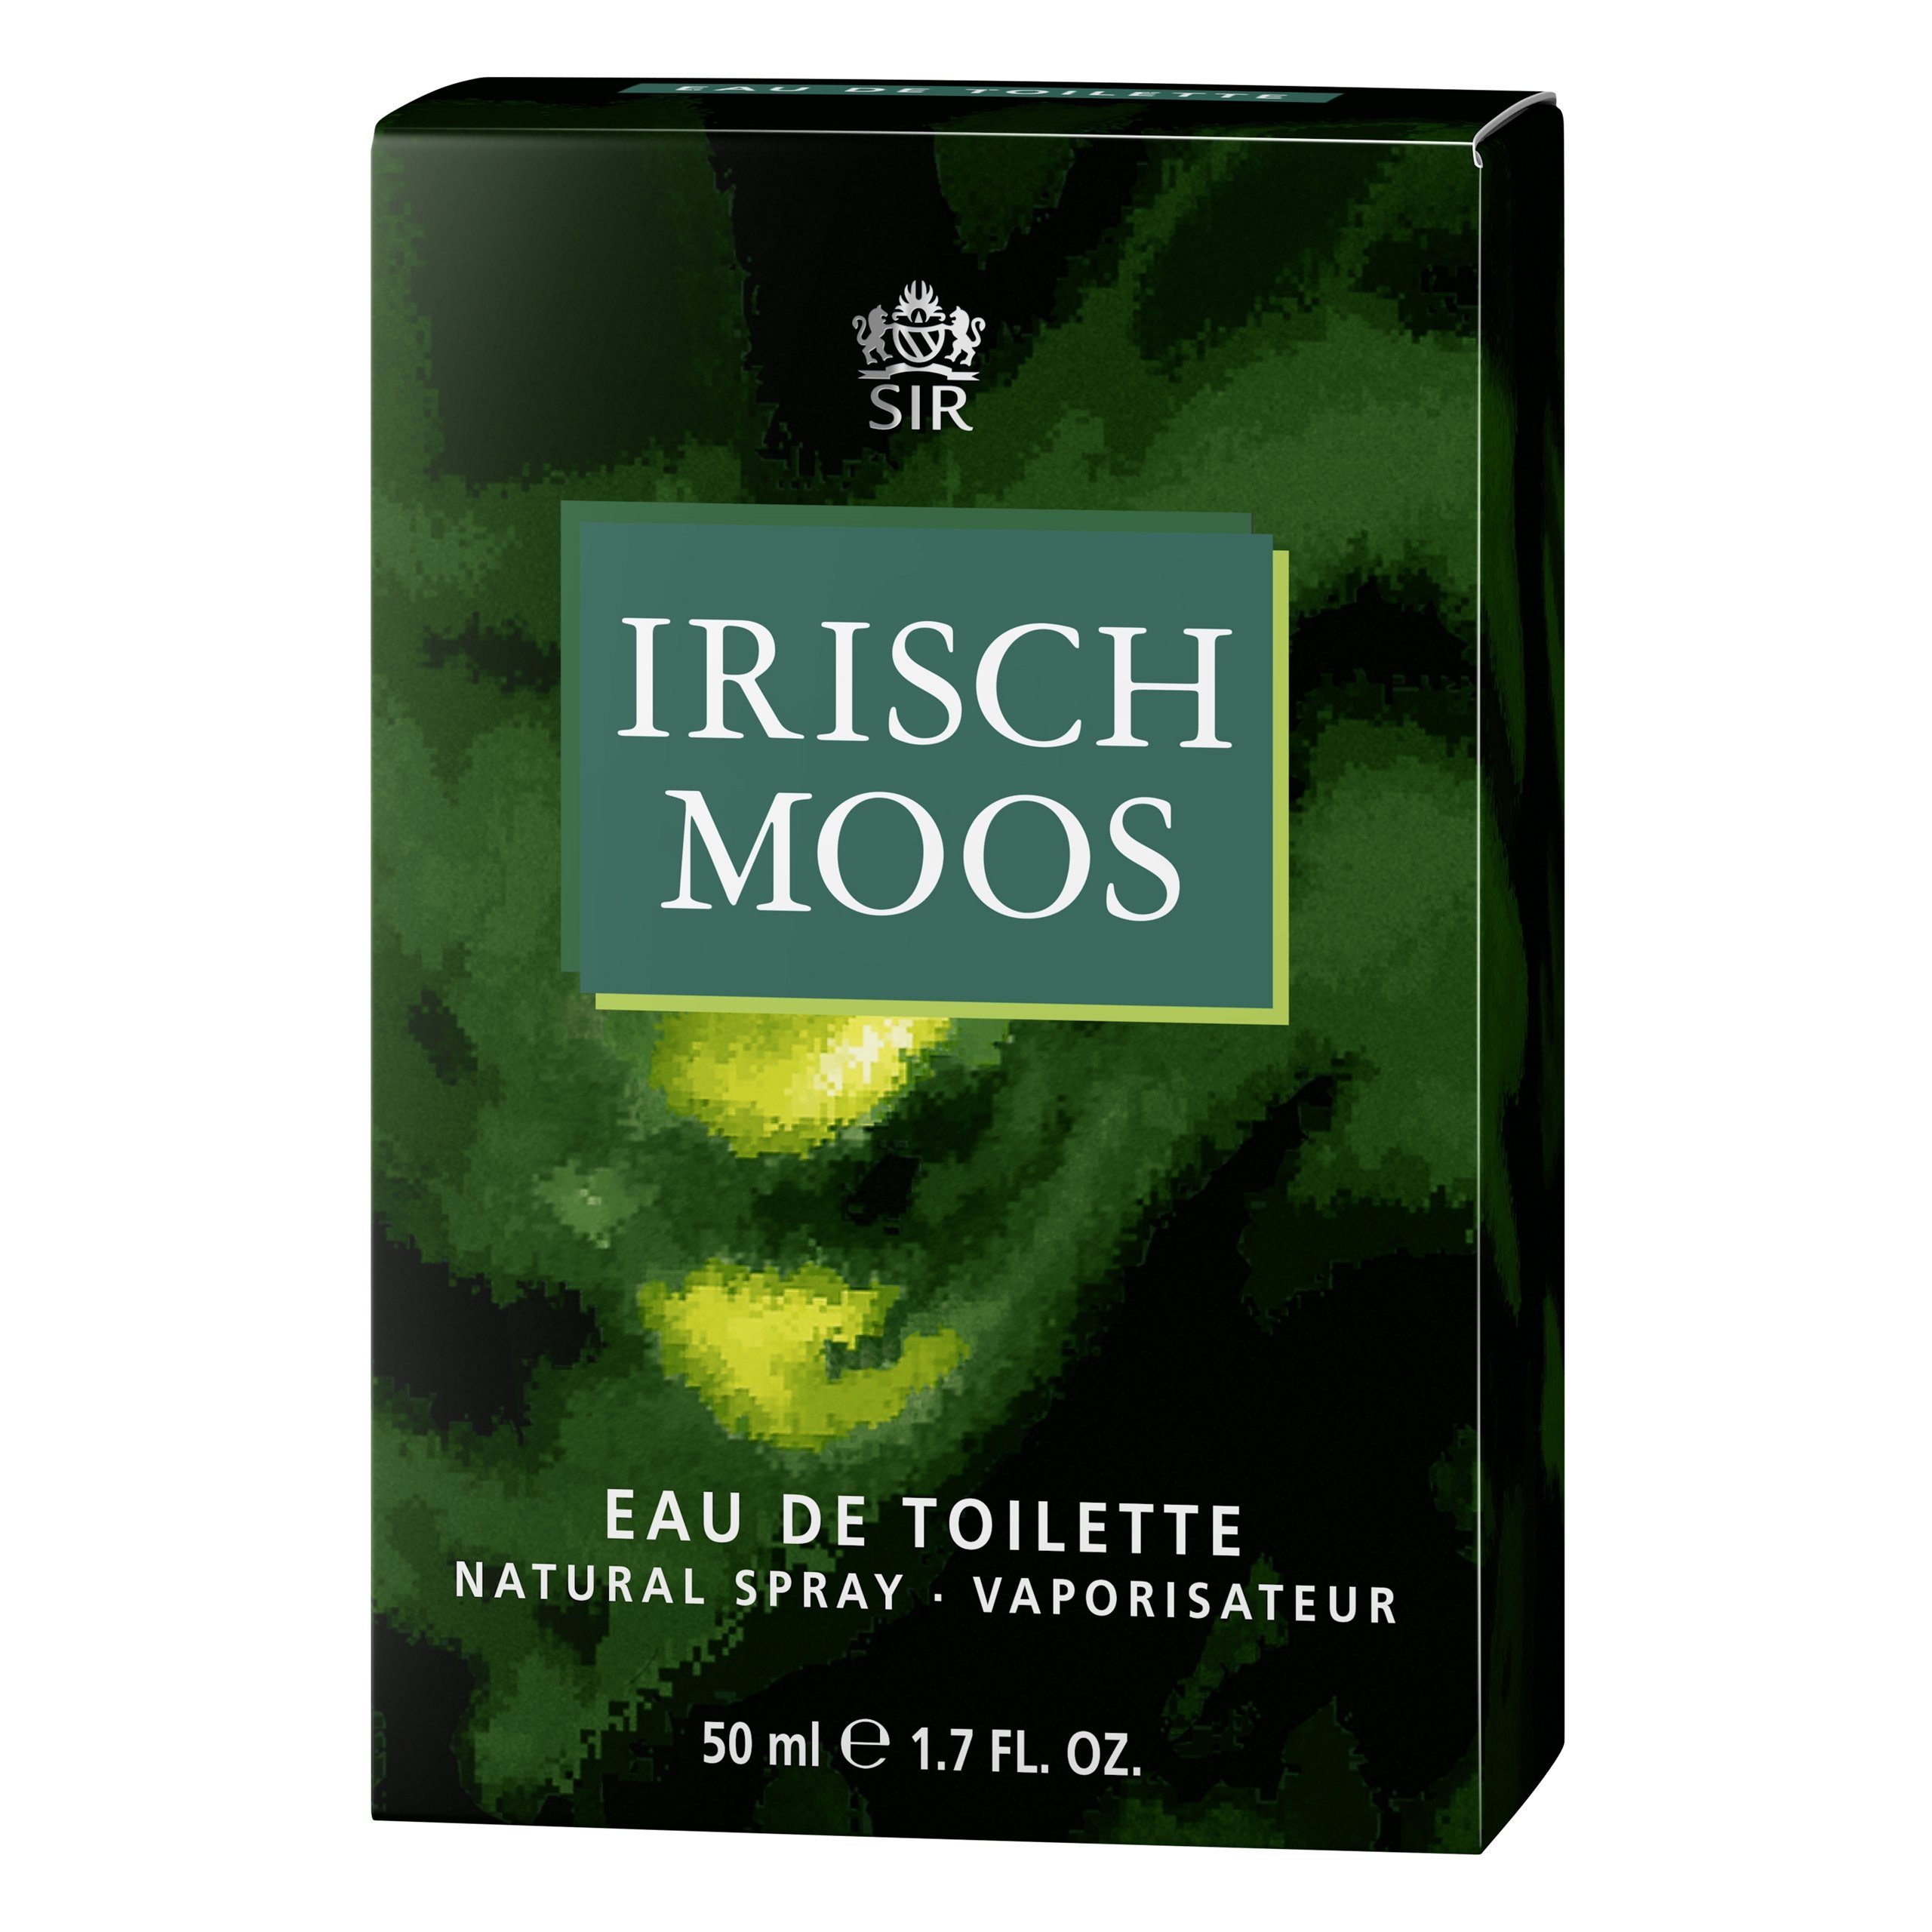 Toilette MOOS Irisch IRISCH Eau Eau 50 Sir de Toilette SIR Moos de ml